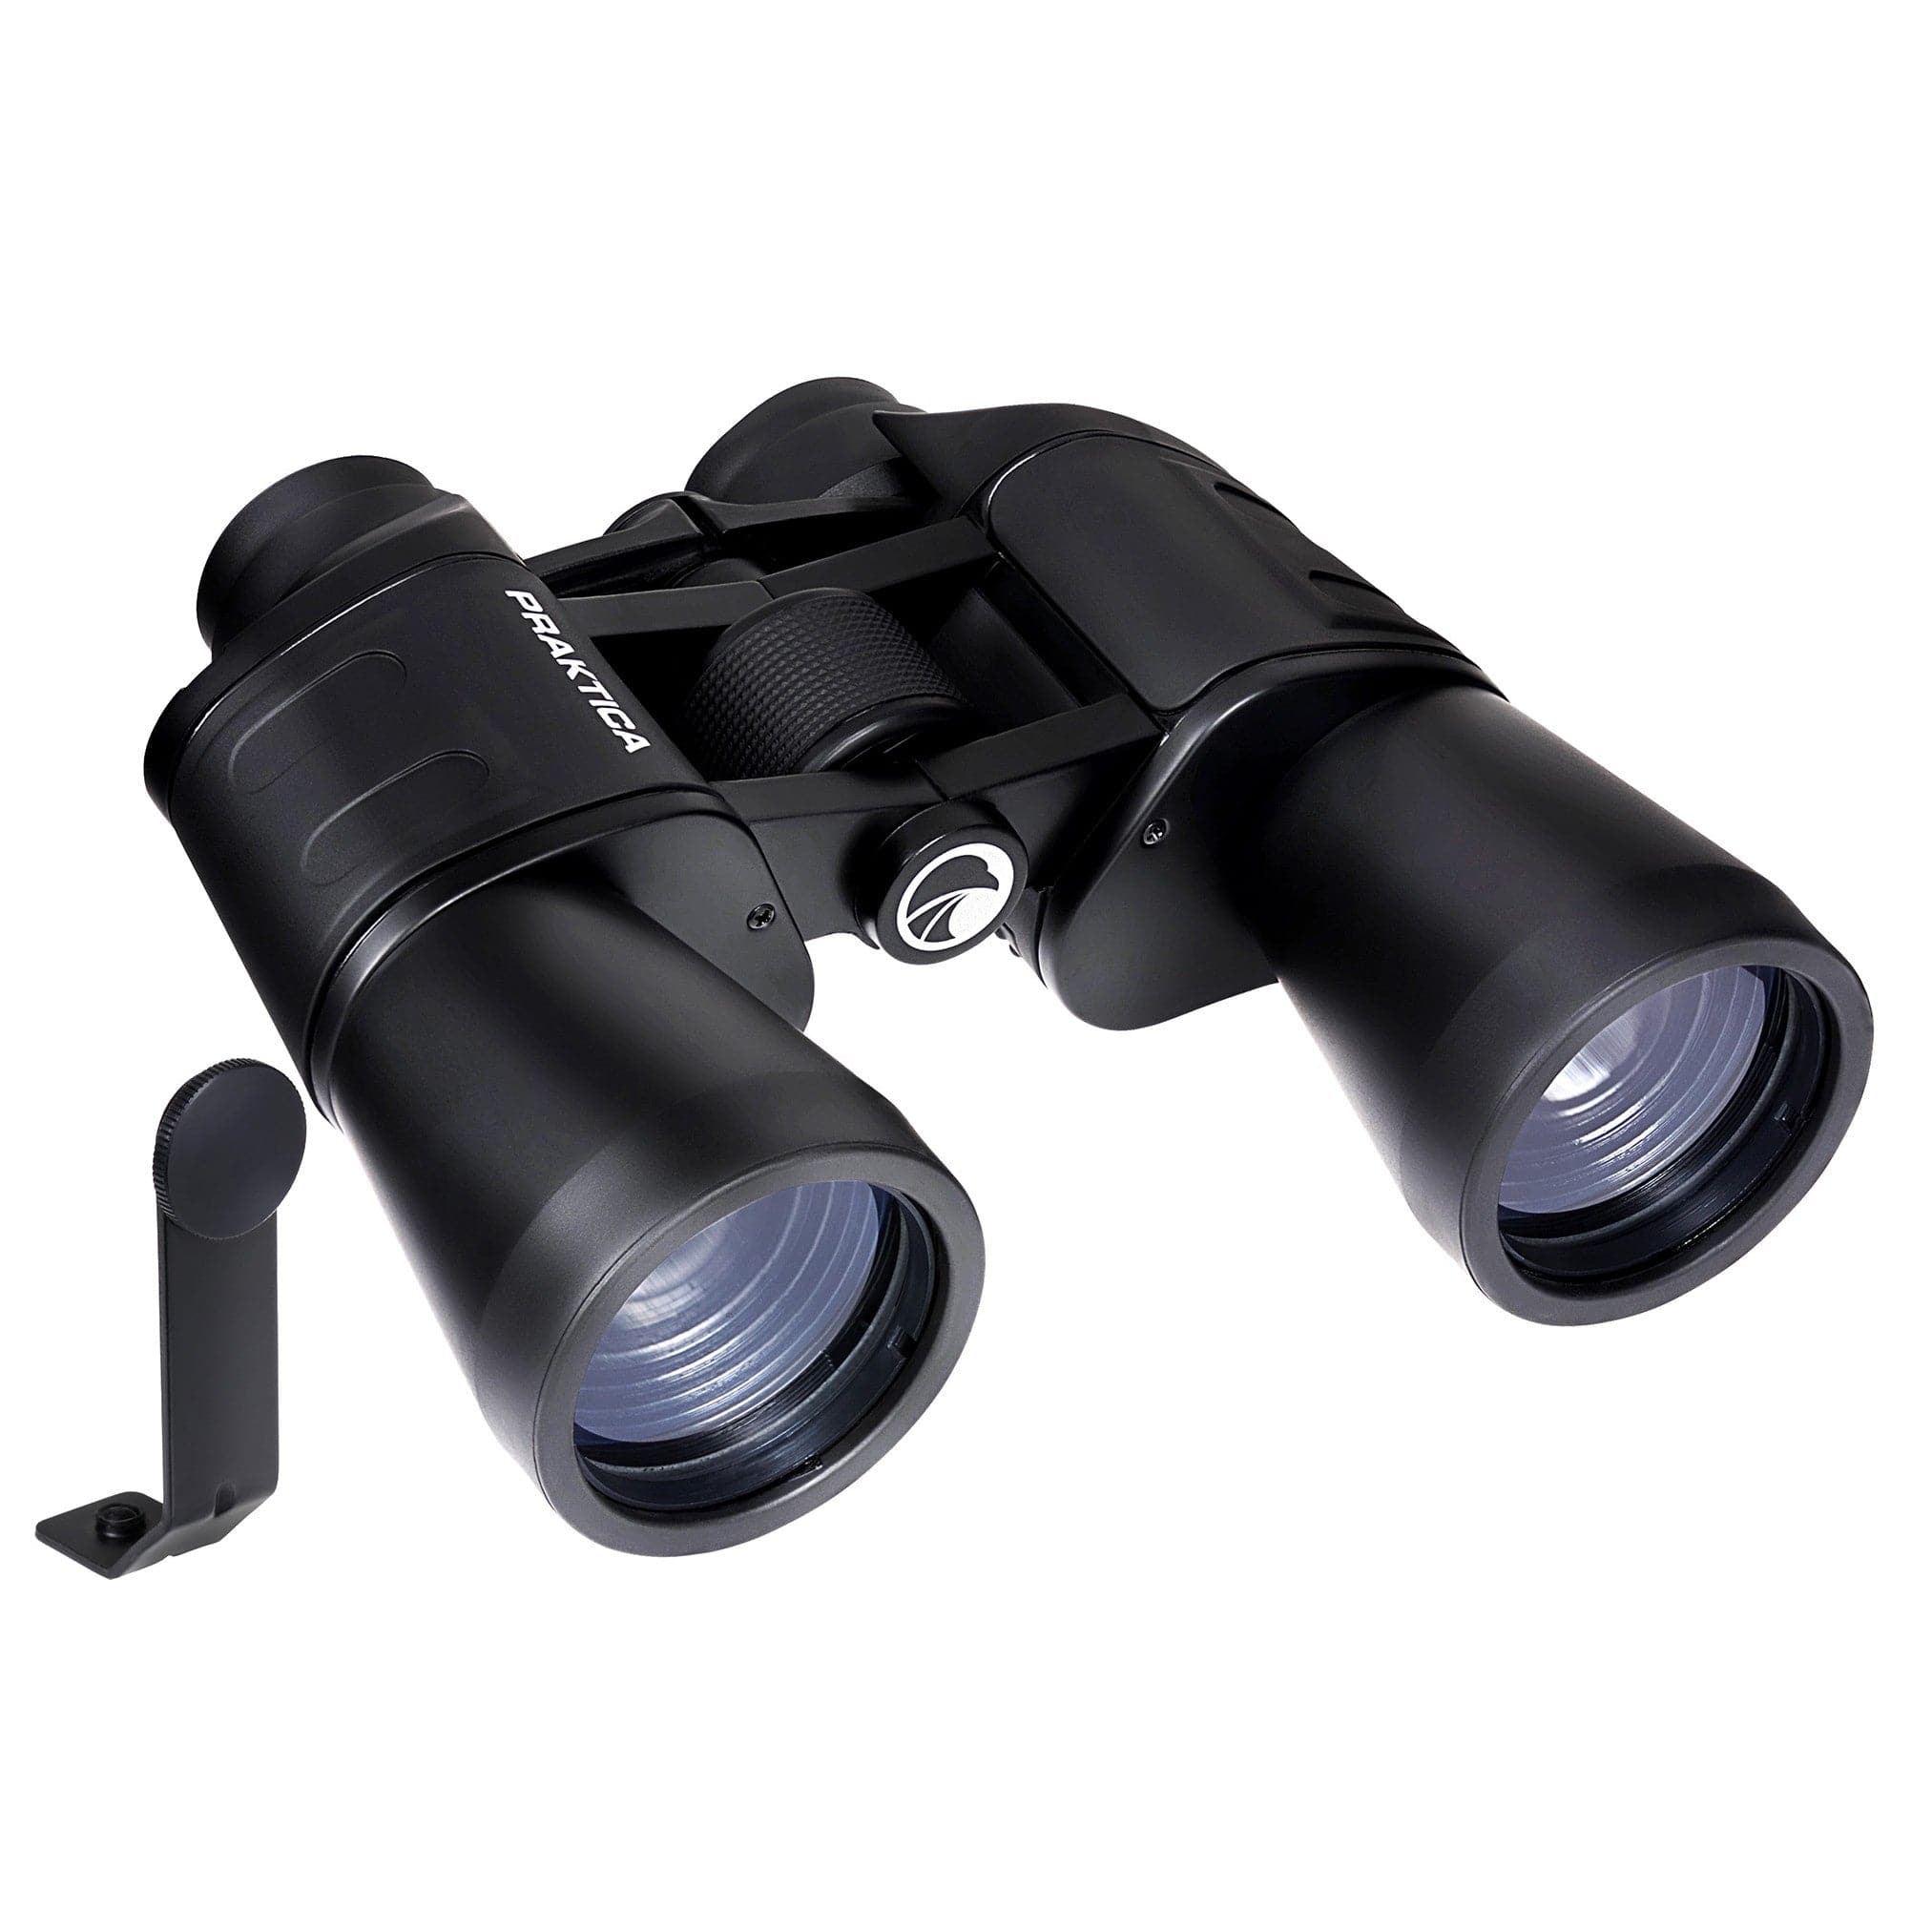 PRAKTICA Falcon 12x50mm Porro Prism Field Binoculars - Black (Binoculars + Tripod Mount)